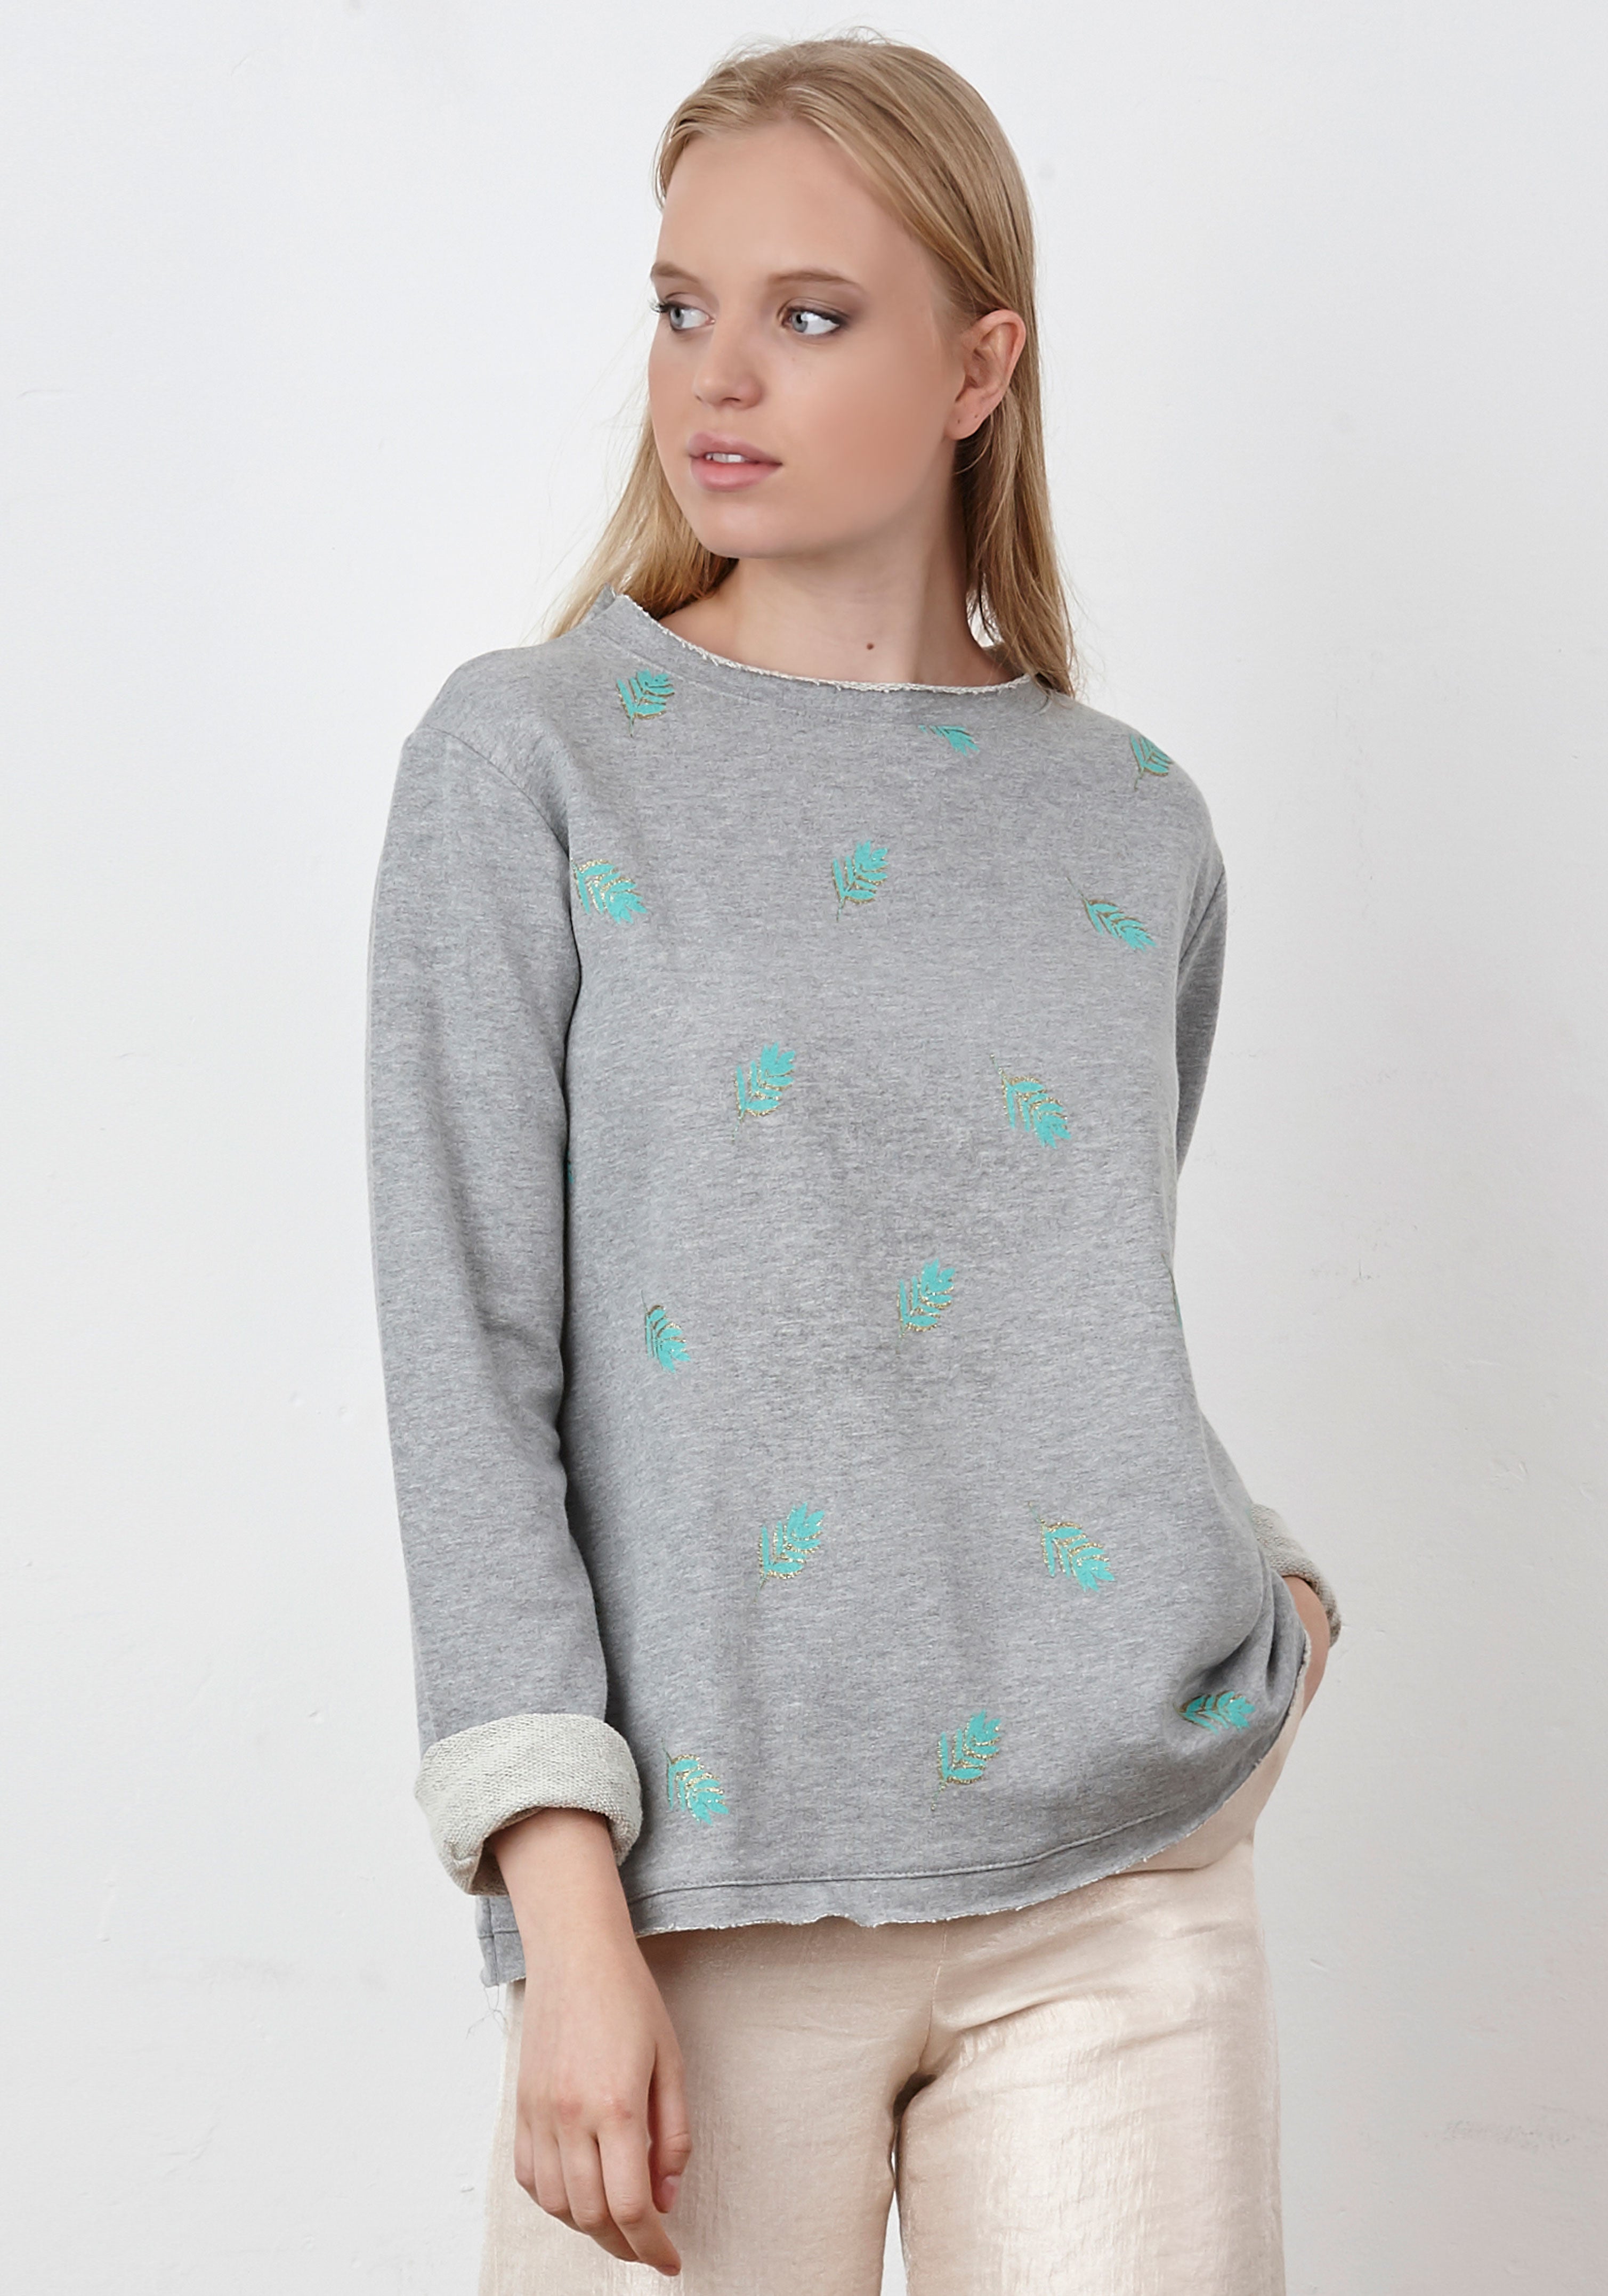 GRAY sweatshirt with branch print